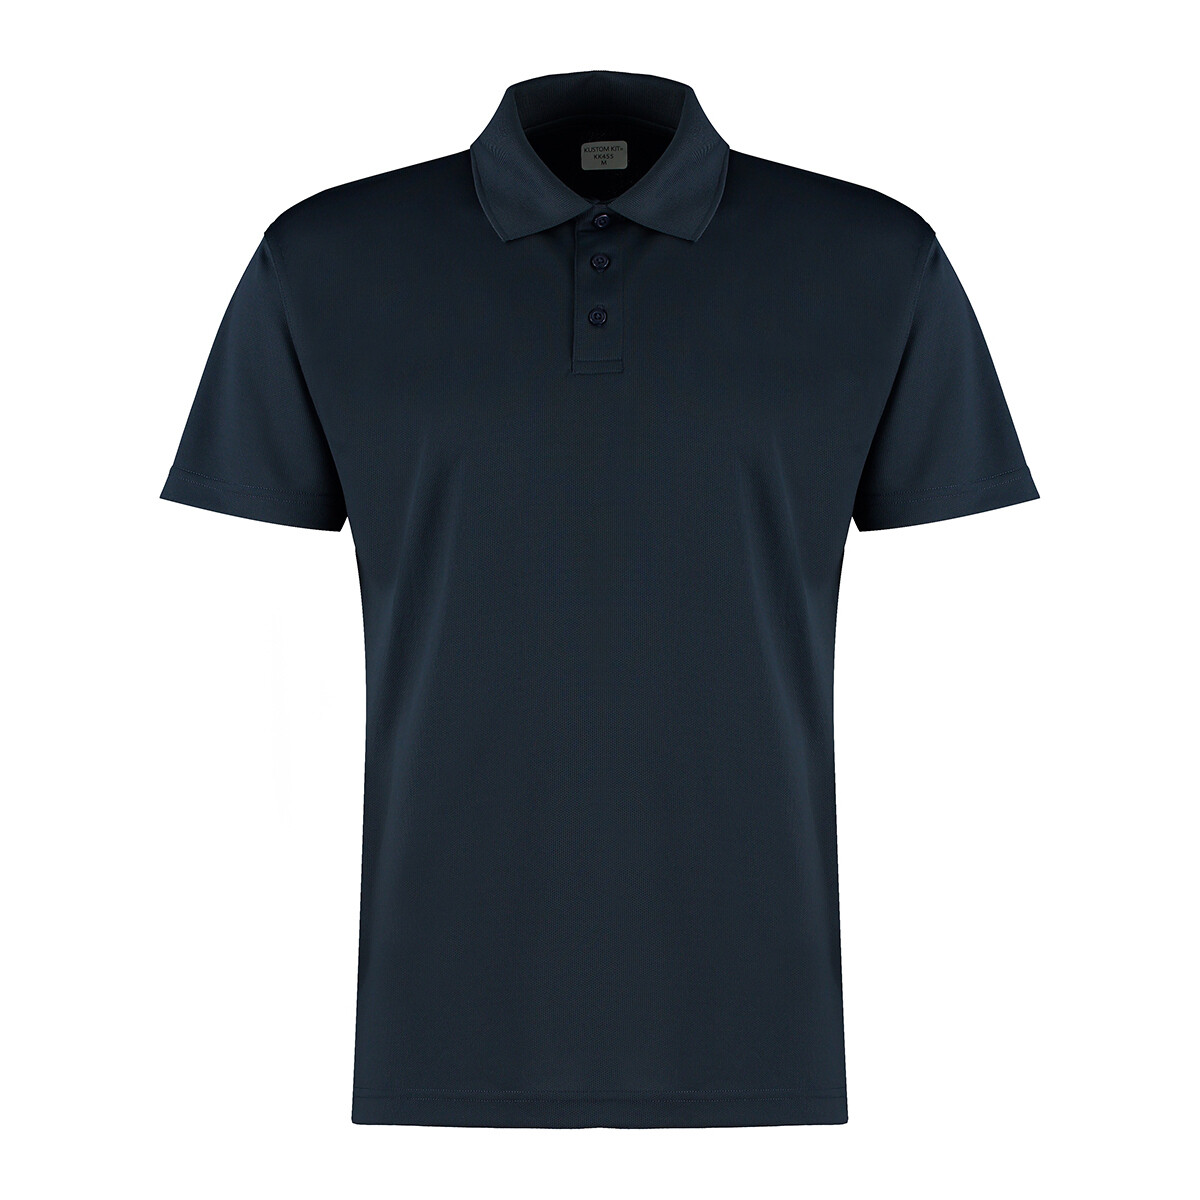 textil Hombre Tops y Camisetas Kustom Kit Cooltex Plus Azul